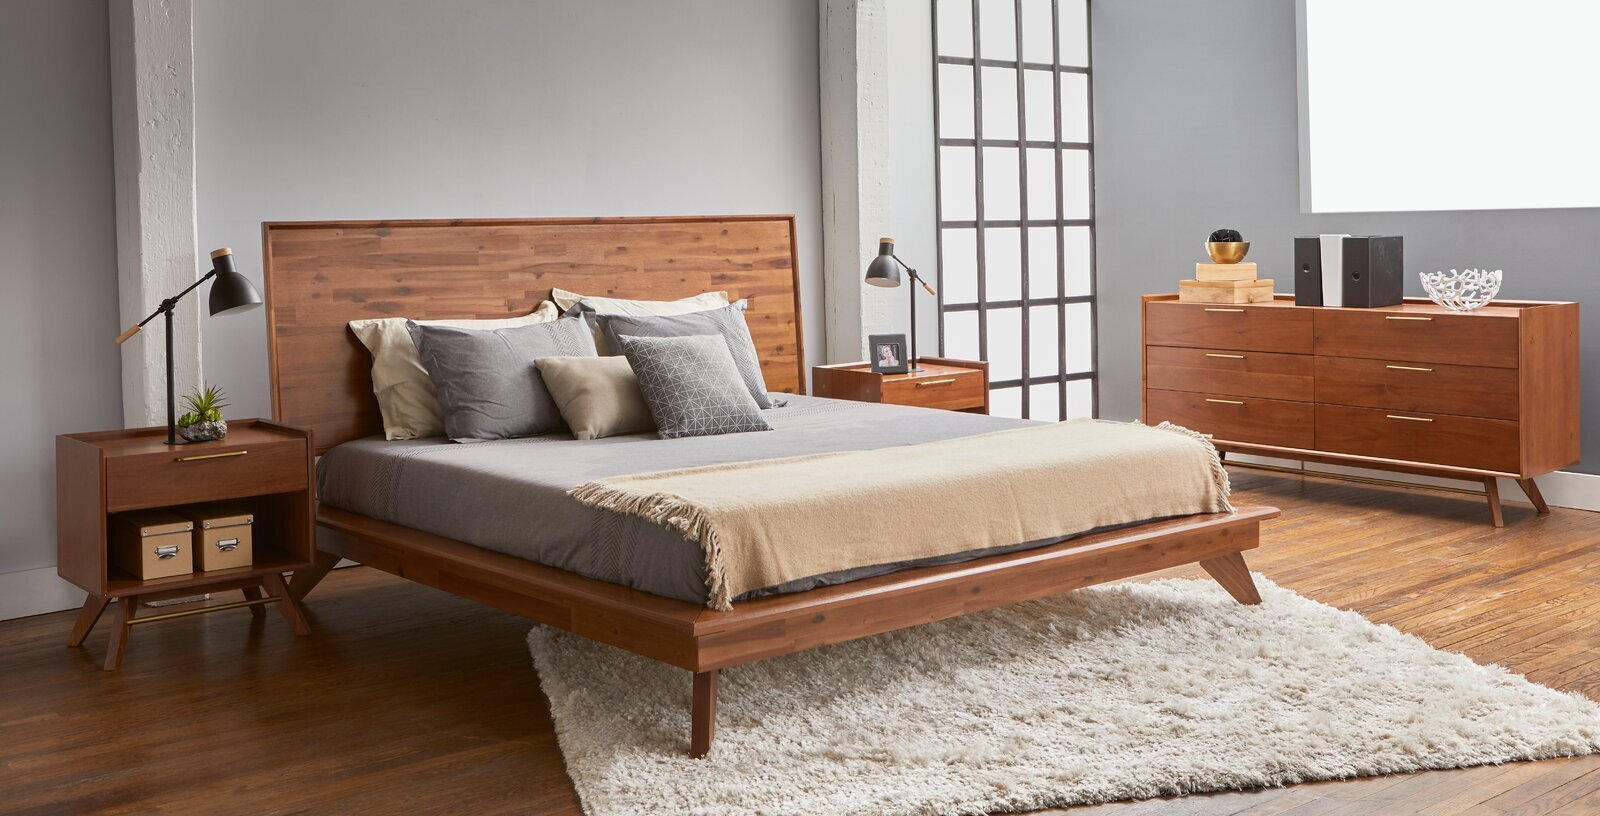 Mid century modern brown bedroom furniture set